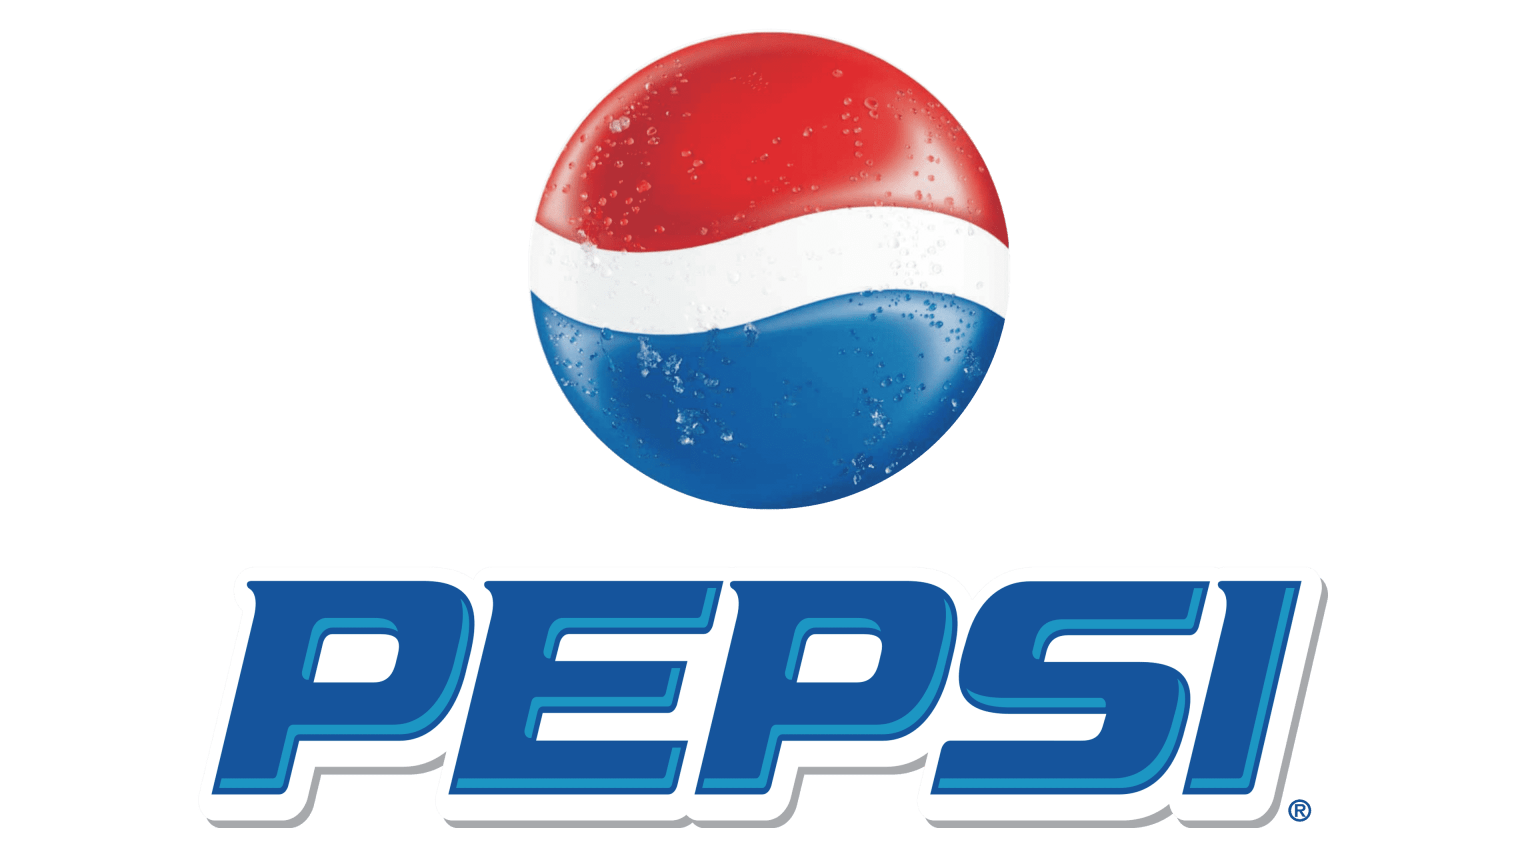 Pepsi logo download in SVG vector format or in PNG format